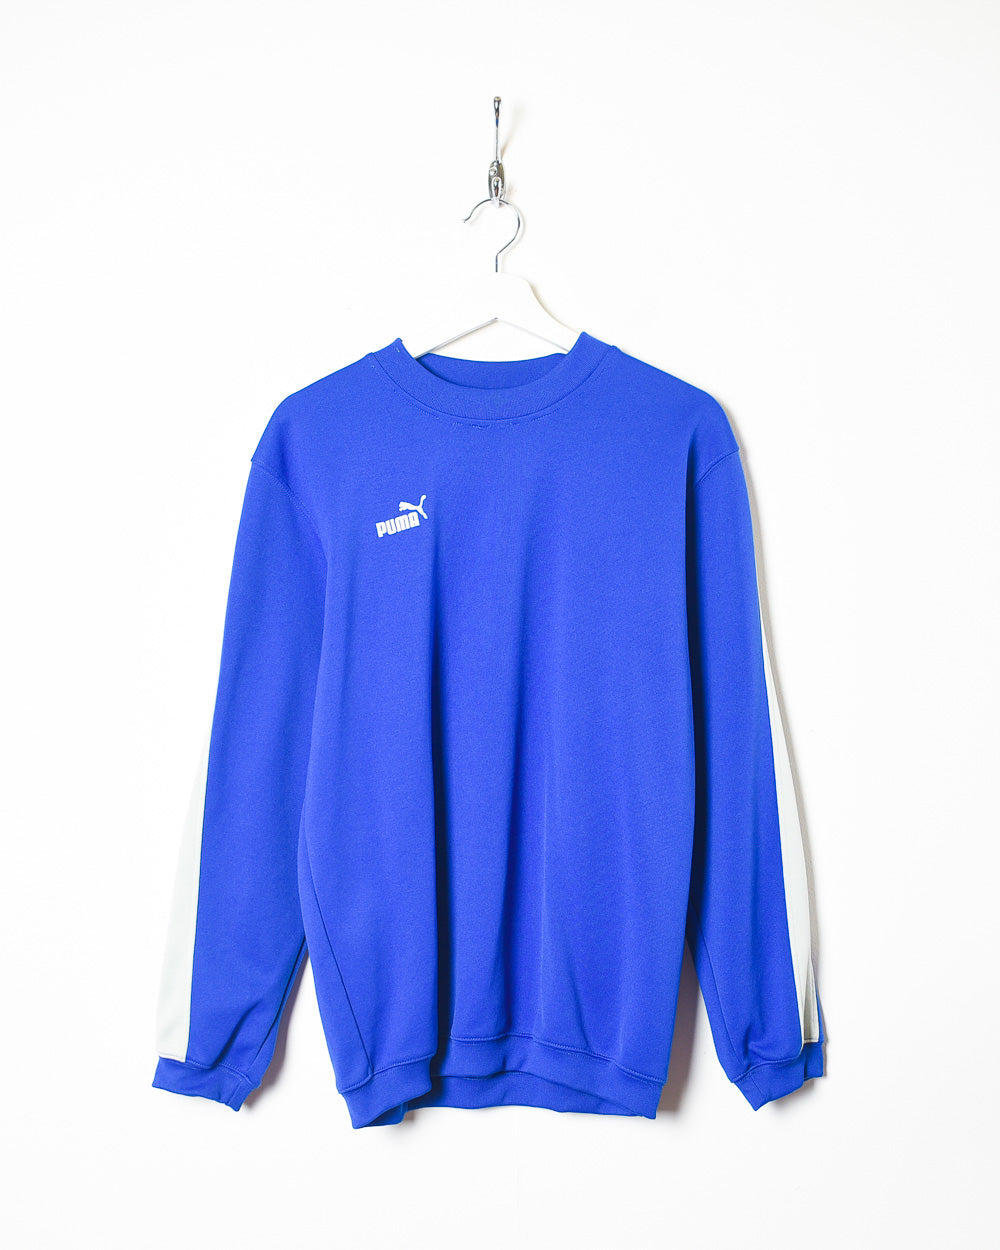 Blue Puma Sweatshirt - Medium